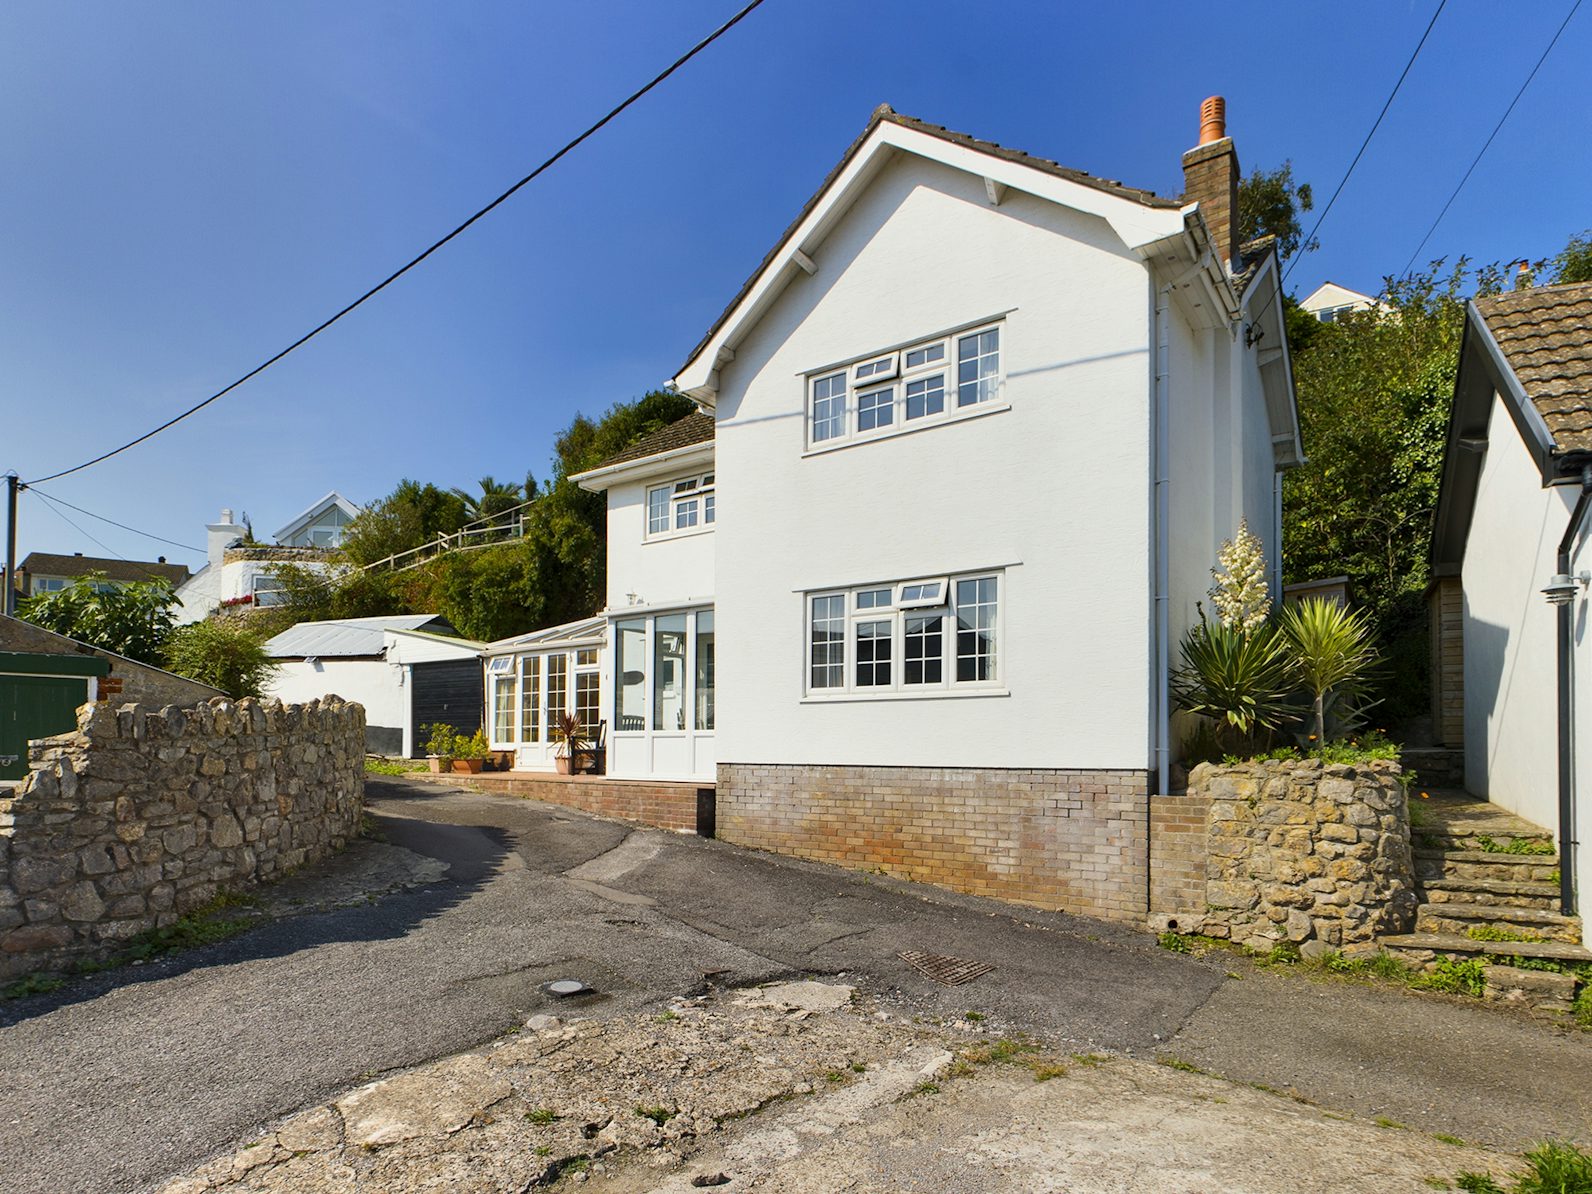 Detached House for sale on Port Eynon, Gower, SA3